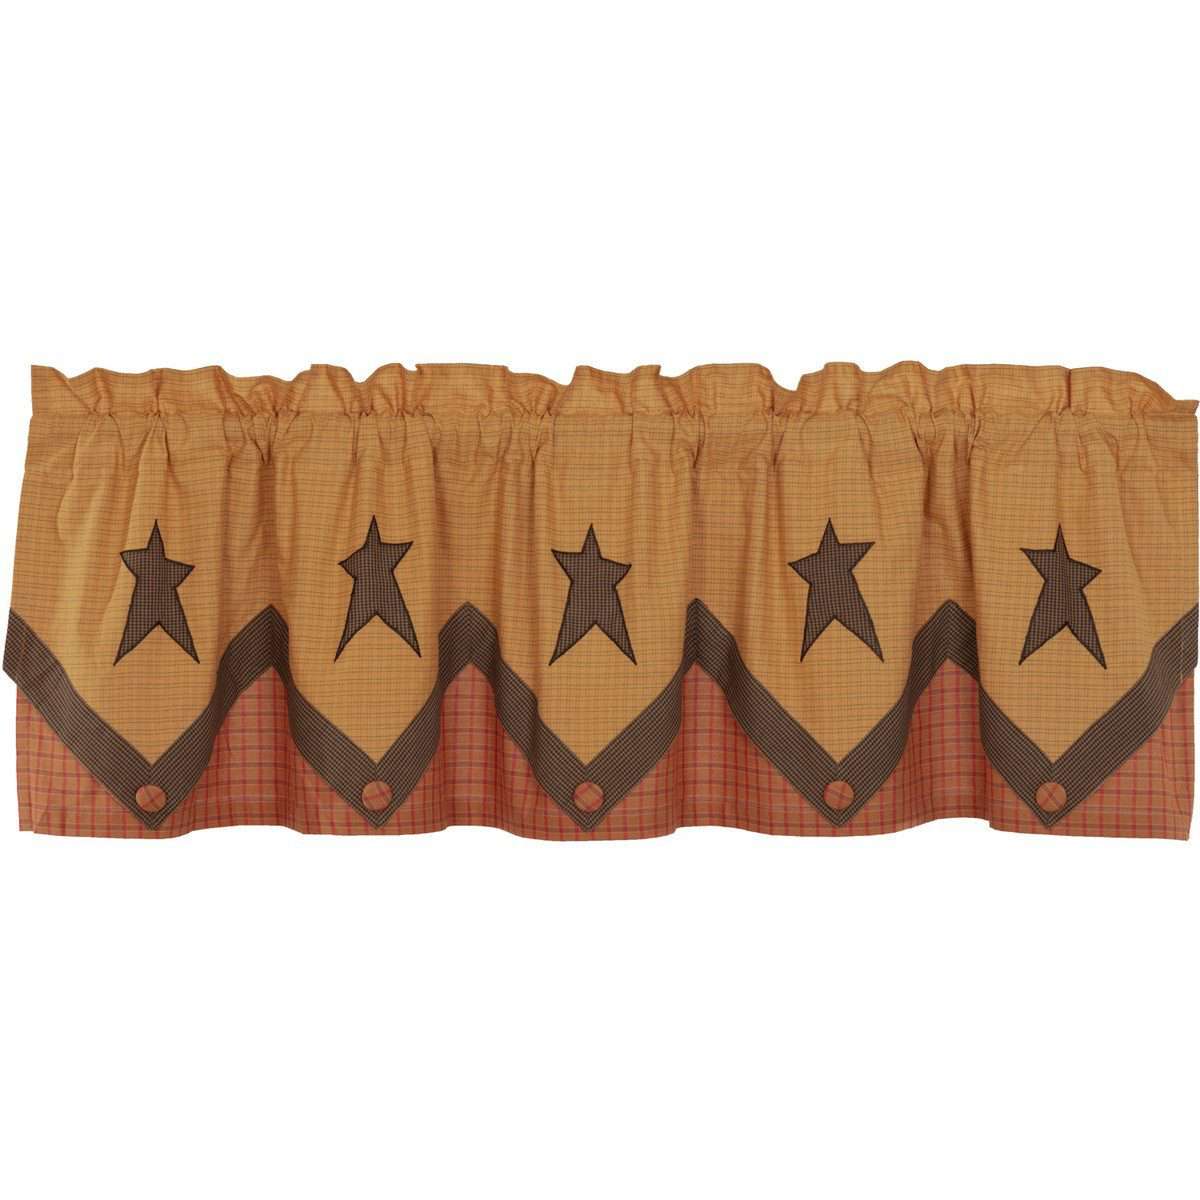 Stratton Primitive Star Valance Curtain Layered Khaki, Orange VHC Brands - The Fox Decor